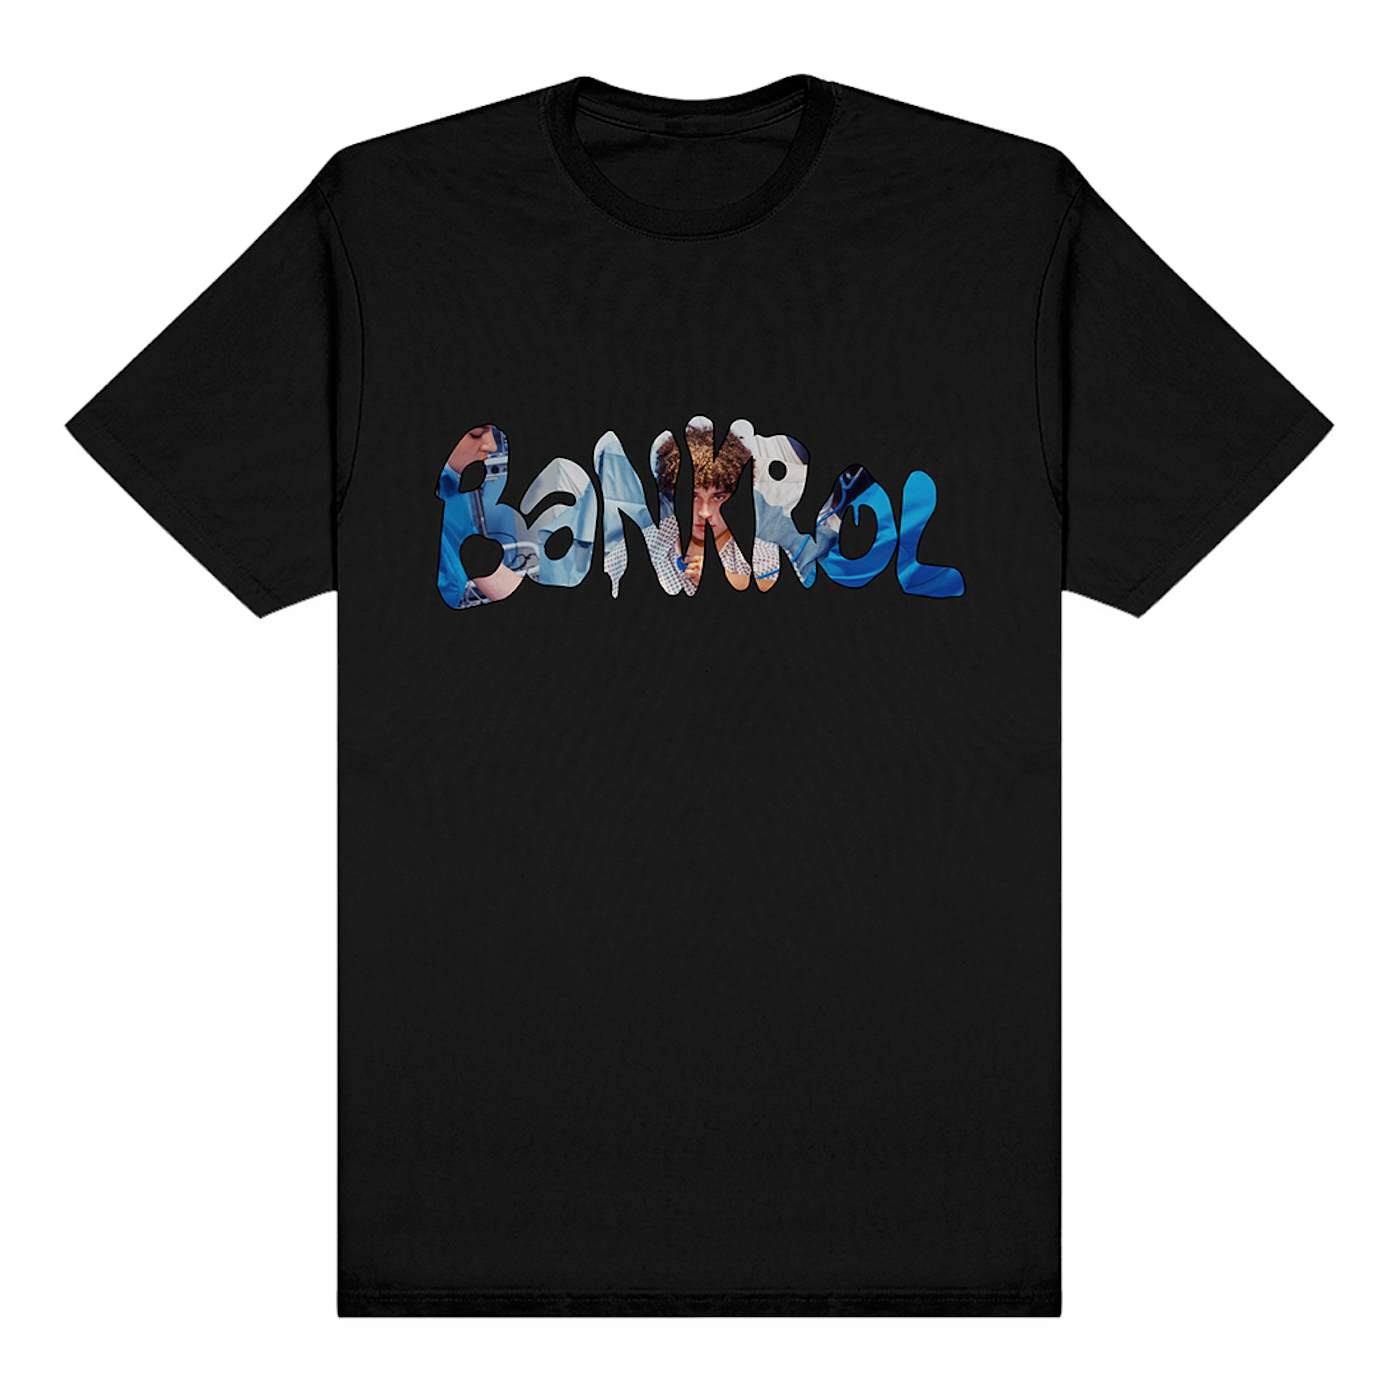 Bankrol Hayden Pain is Temporary T-Shirt (Black)